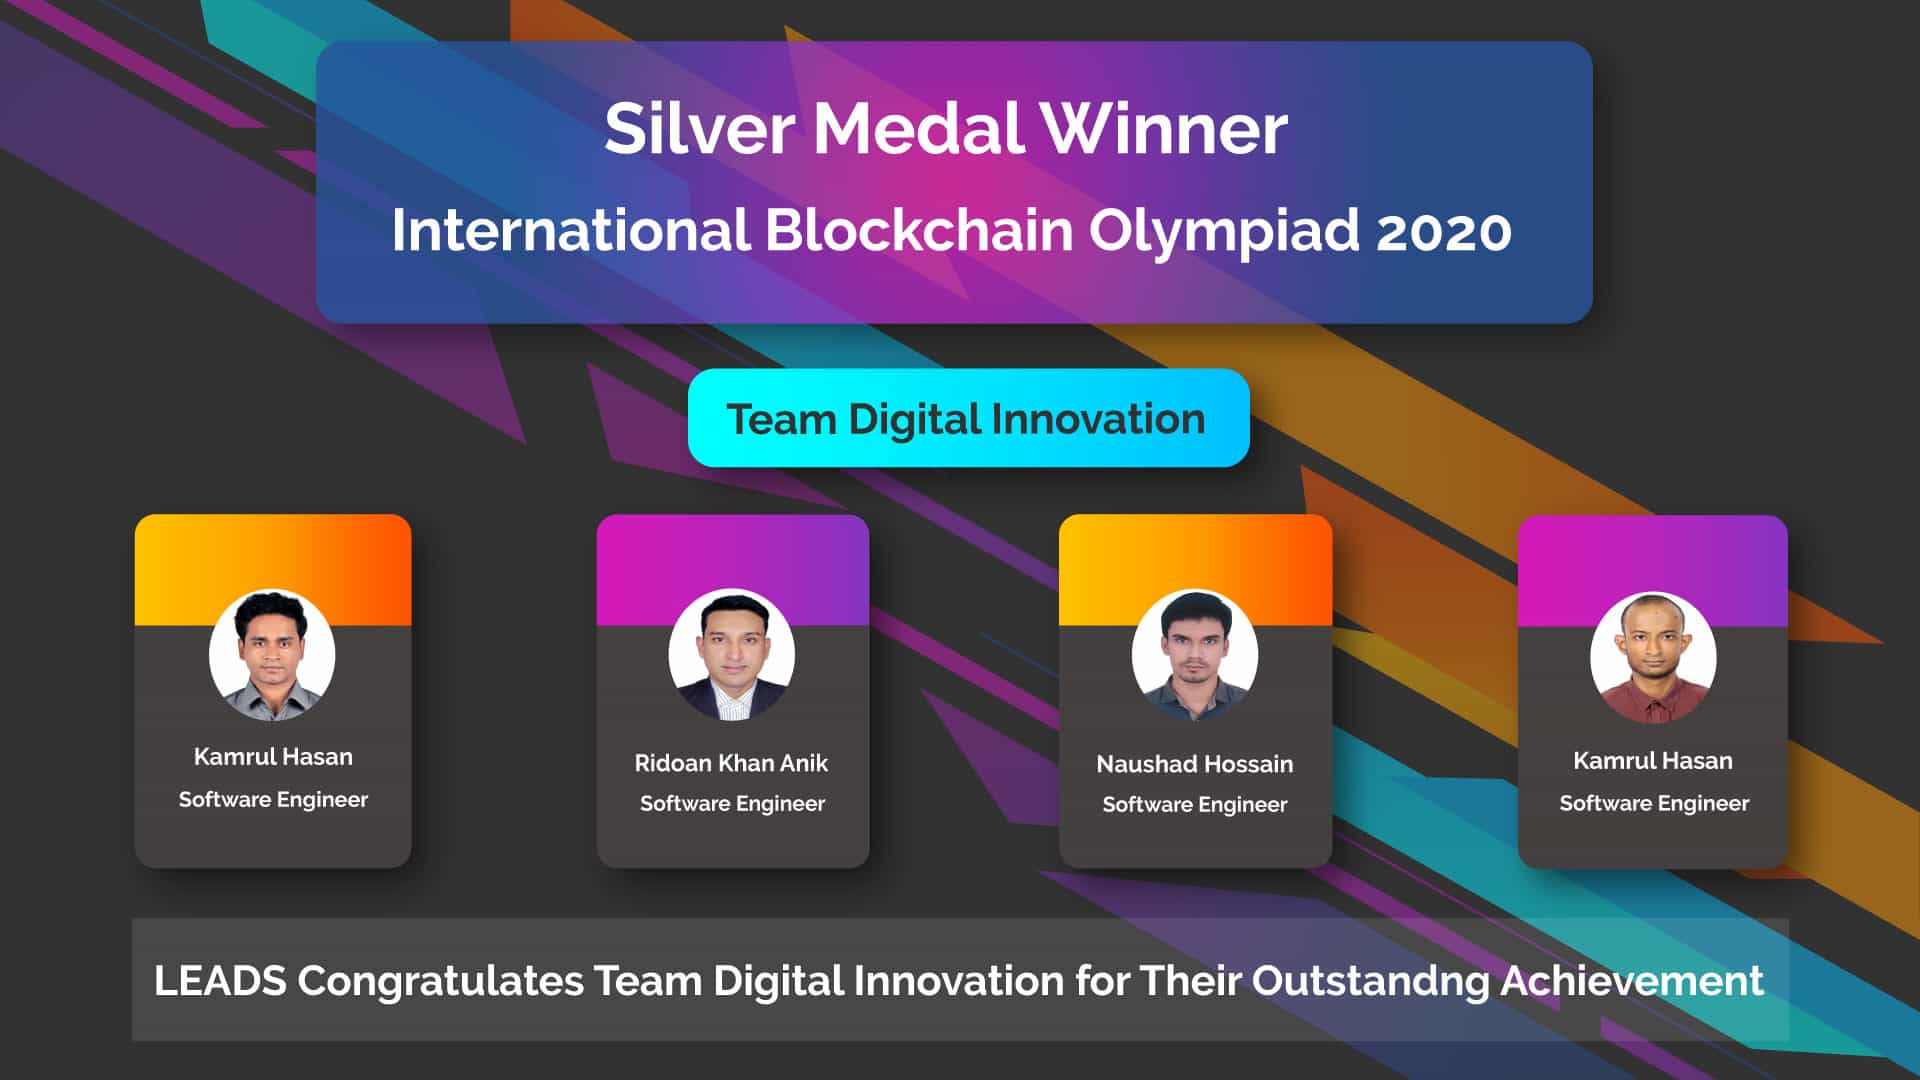 Team Digital Innovation Wins Silver Medal Award in International Blockchain Olympiad 2020